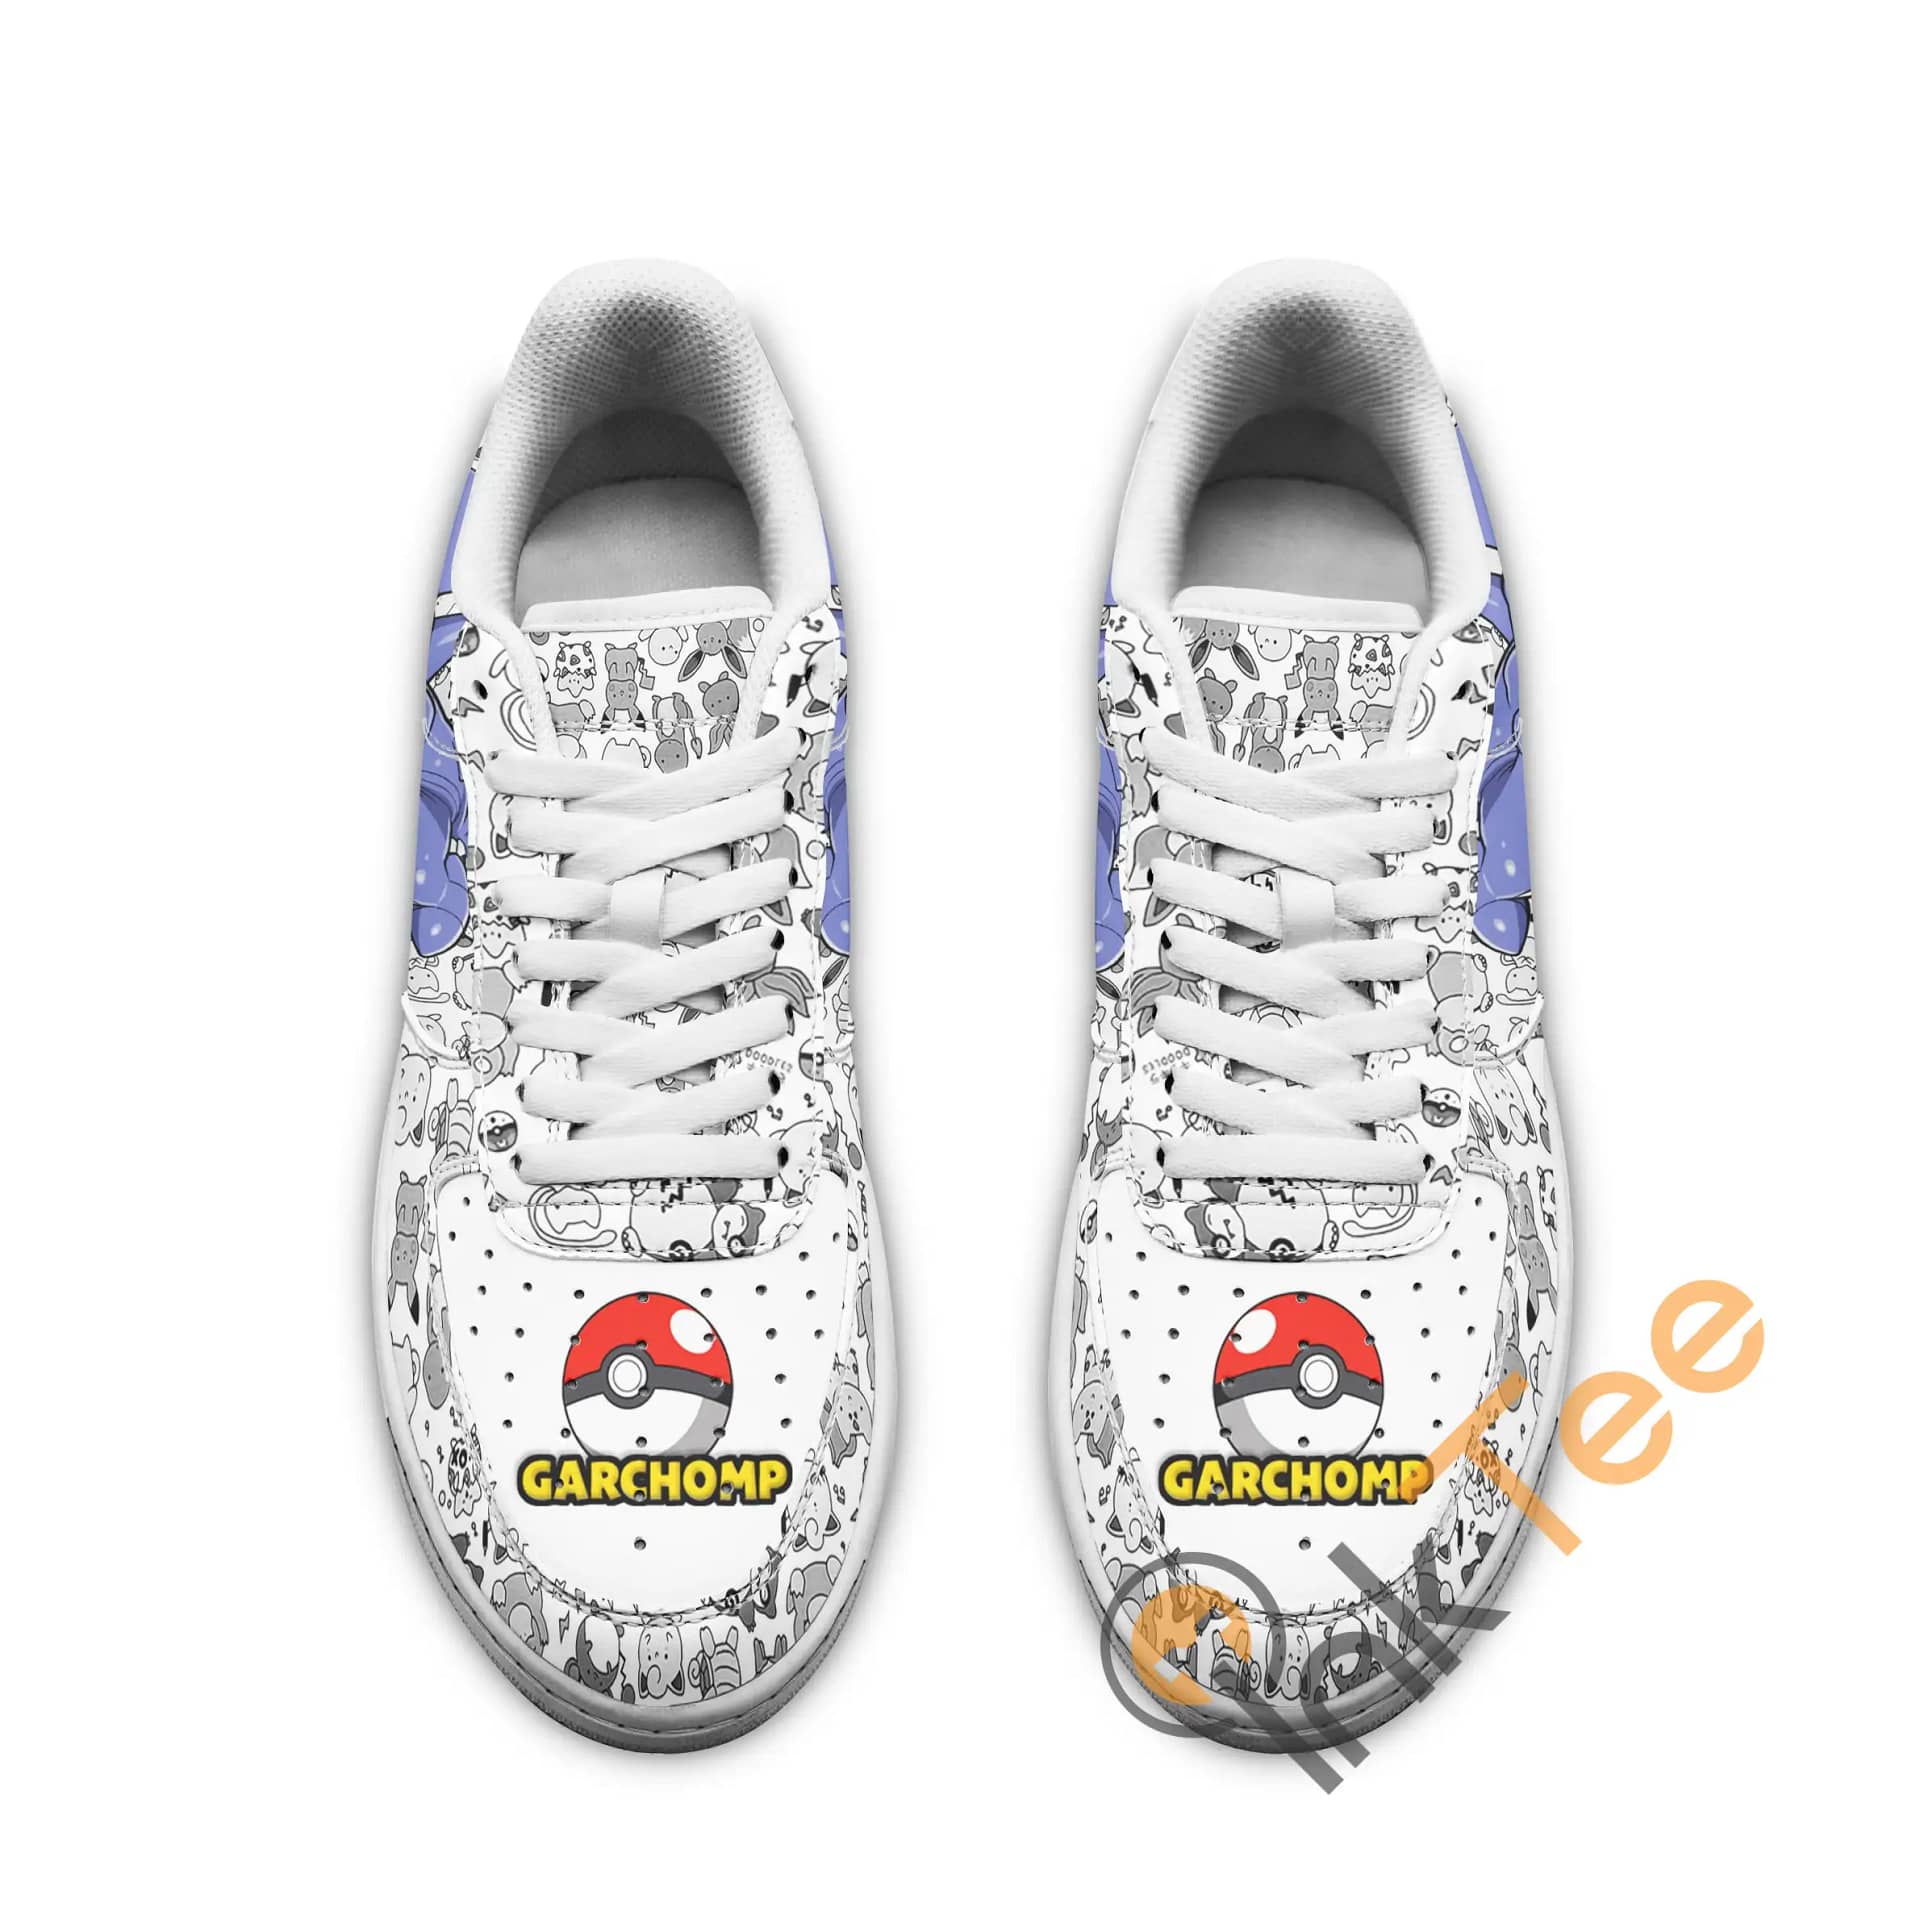 Garchomp Pokemon Fan Gift Idea Amazon Nike Air Force Shoes